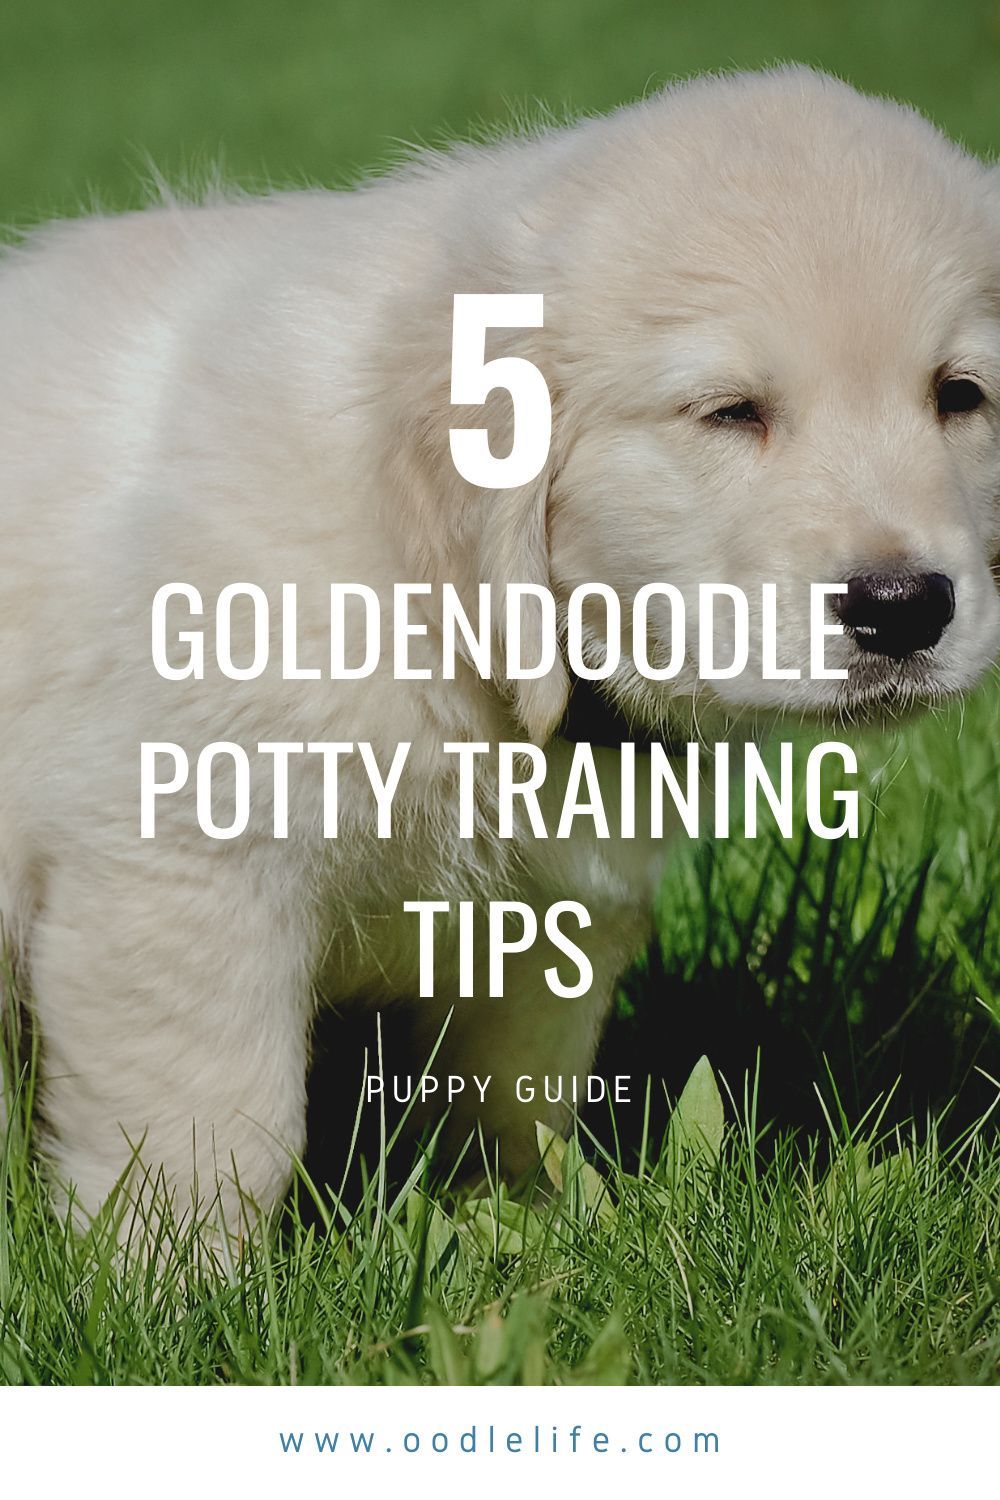 5 Goldendoodle Potty Training Tips